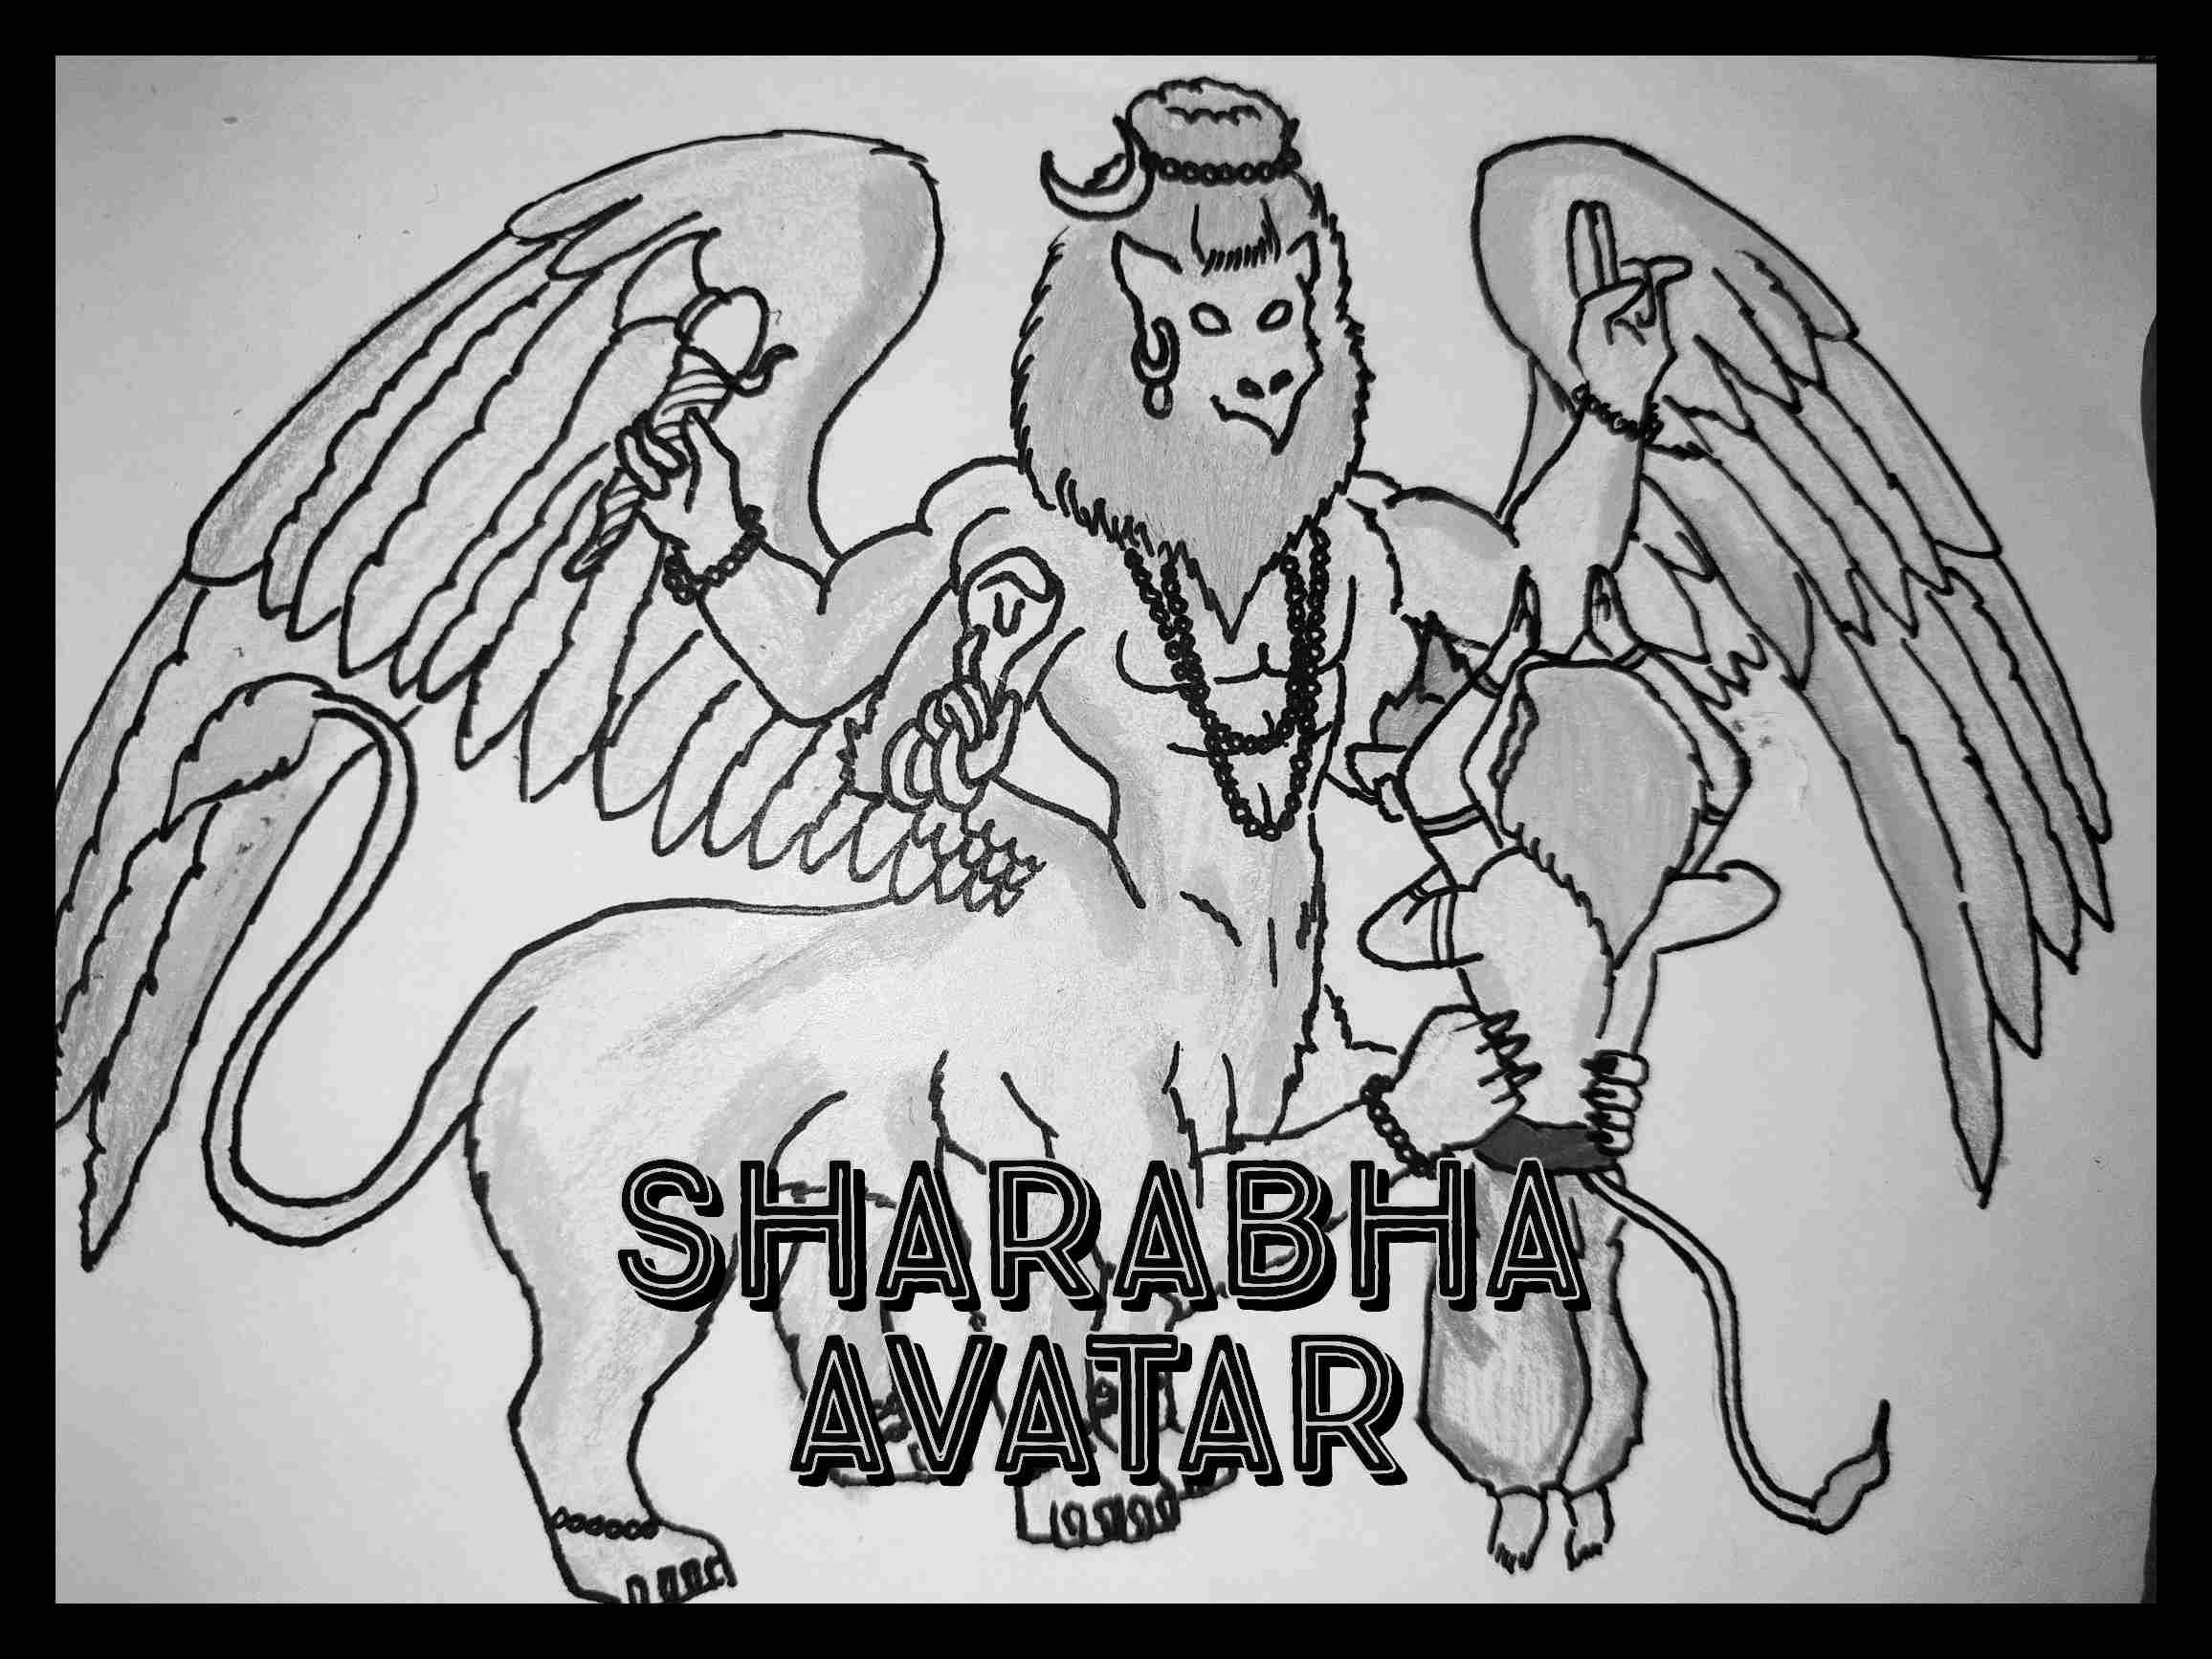 Avatar of Lord Shiva:Sharabha Avatar